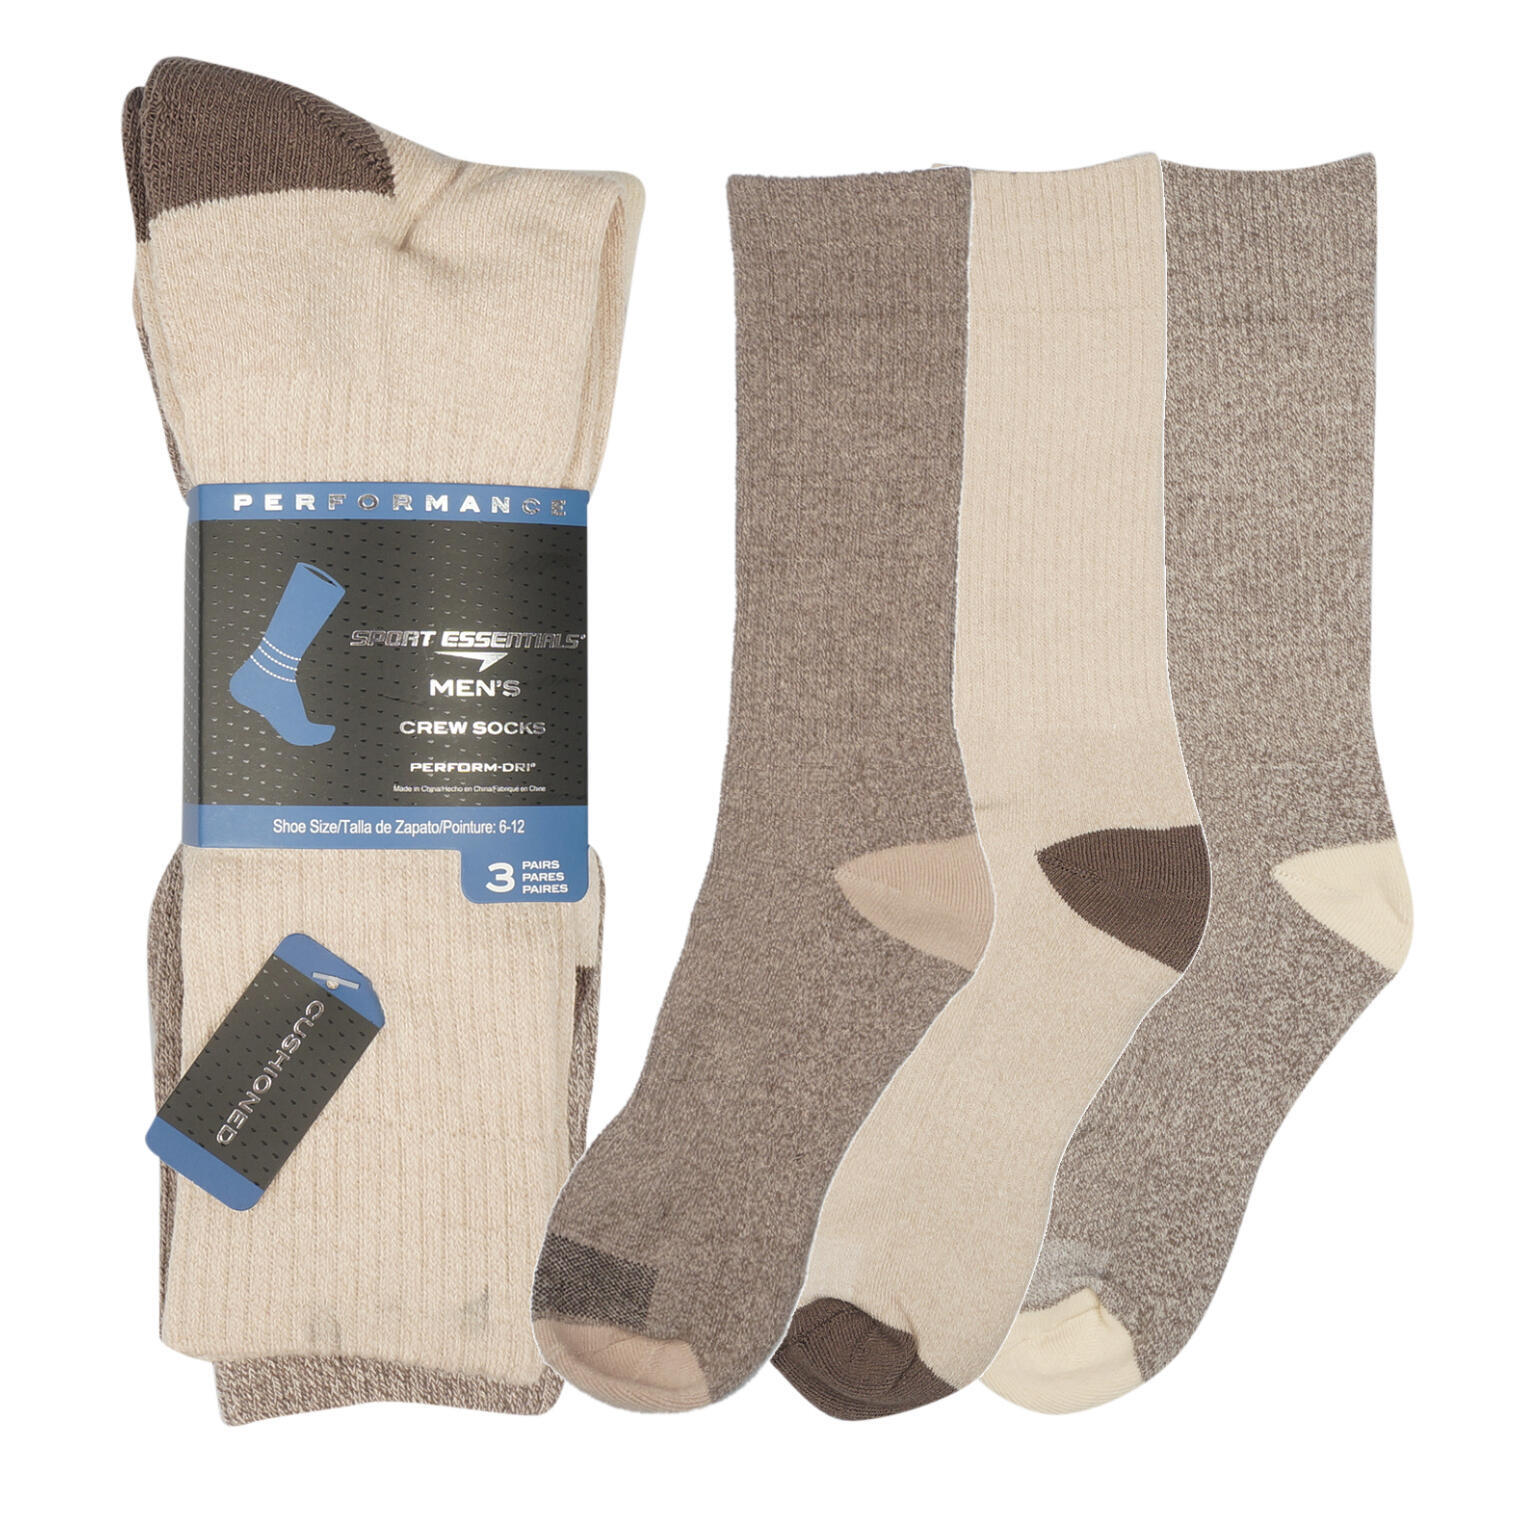 Brown Contrast Sport Essentials Men's Crew Socks - 3 Pairs